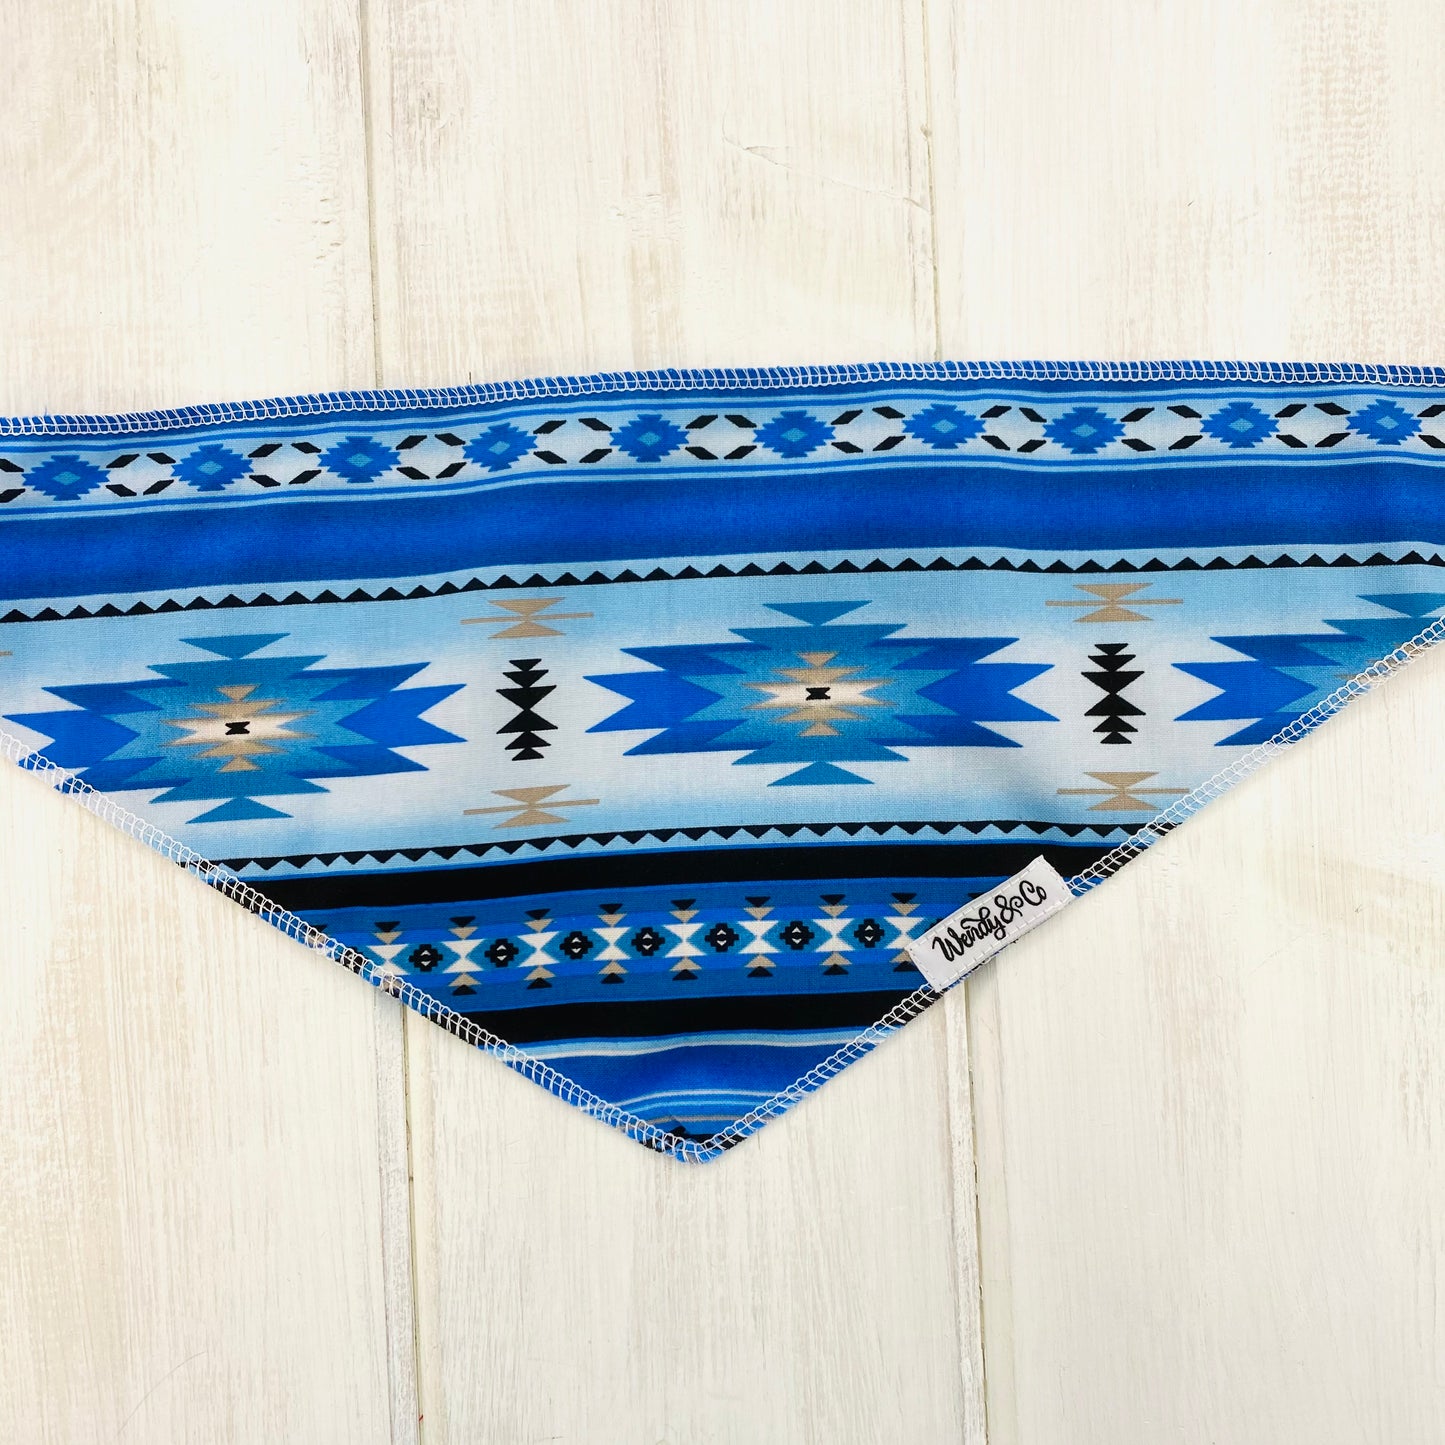 Aztec design dog bandana in blues for sizes extra small to extra large.